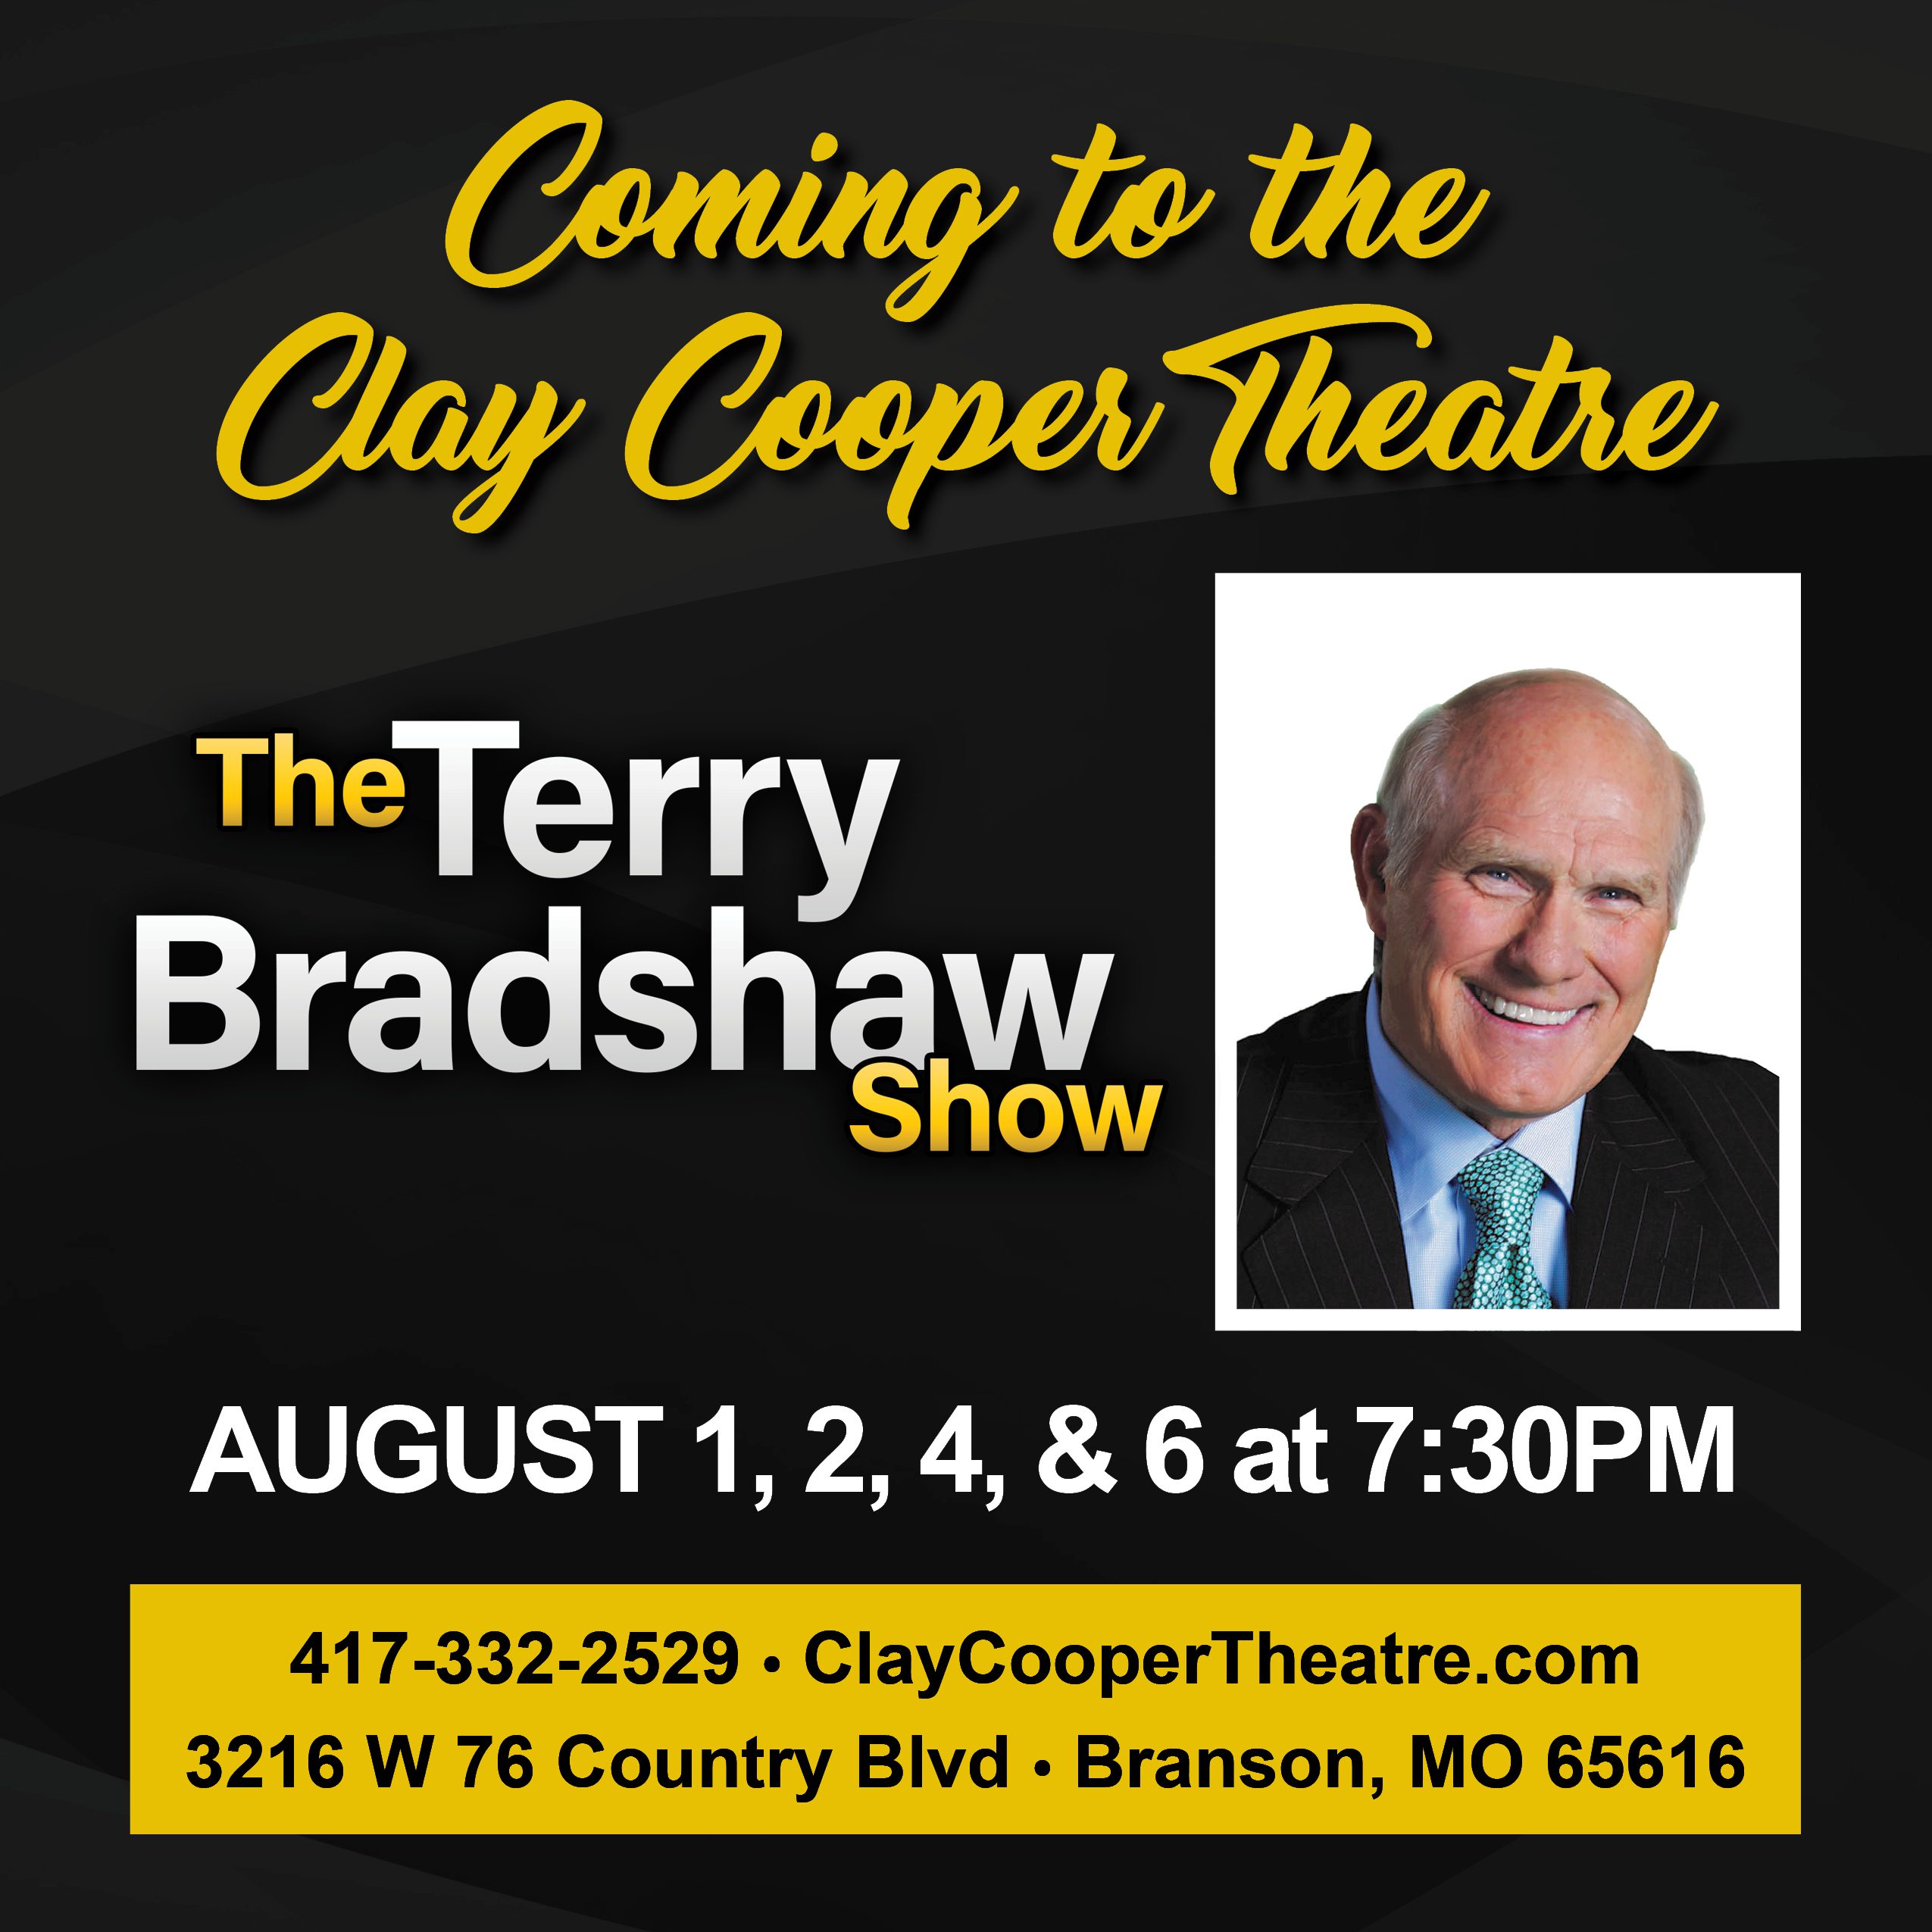 The Terry Bradshaw Show